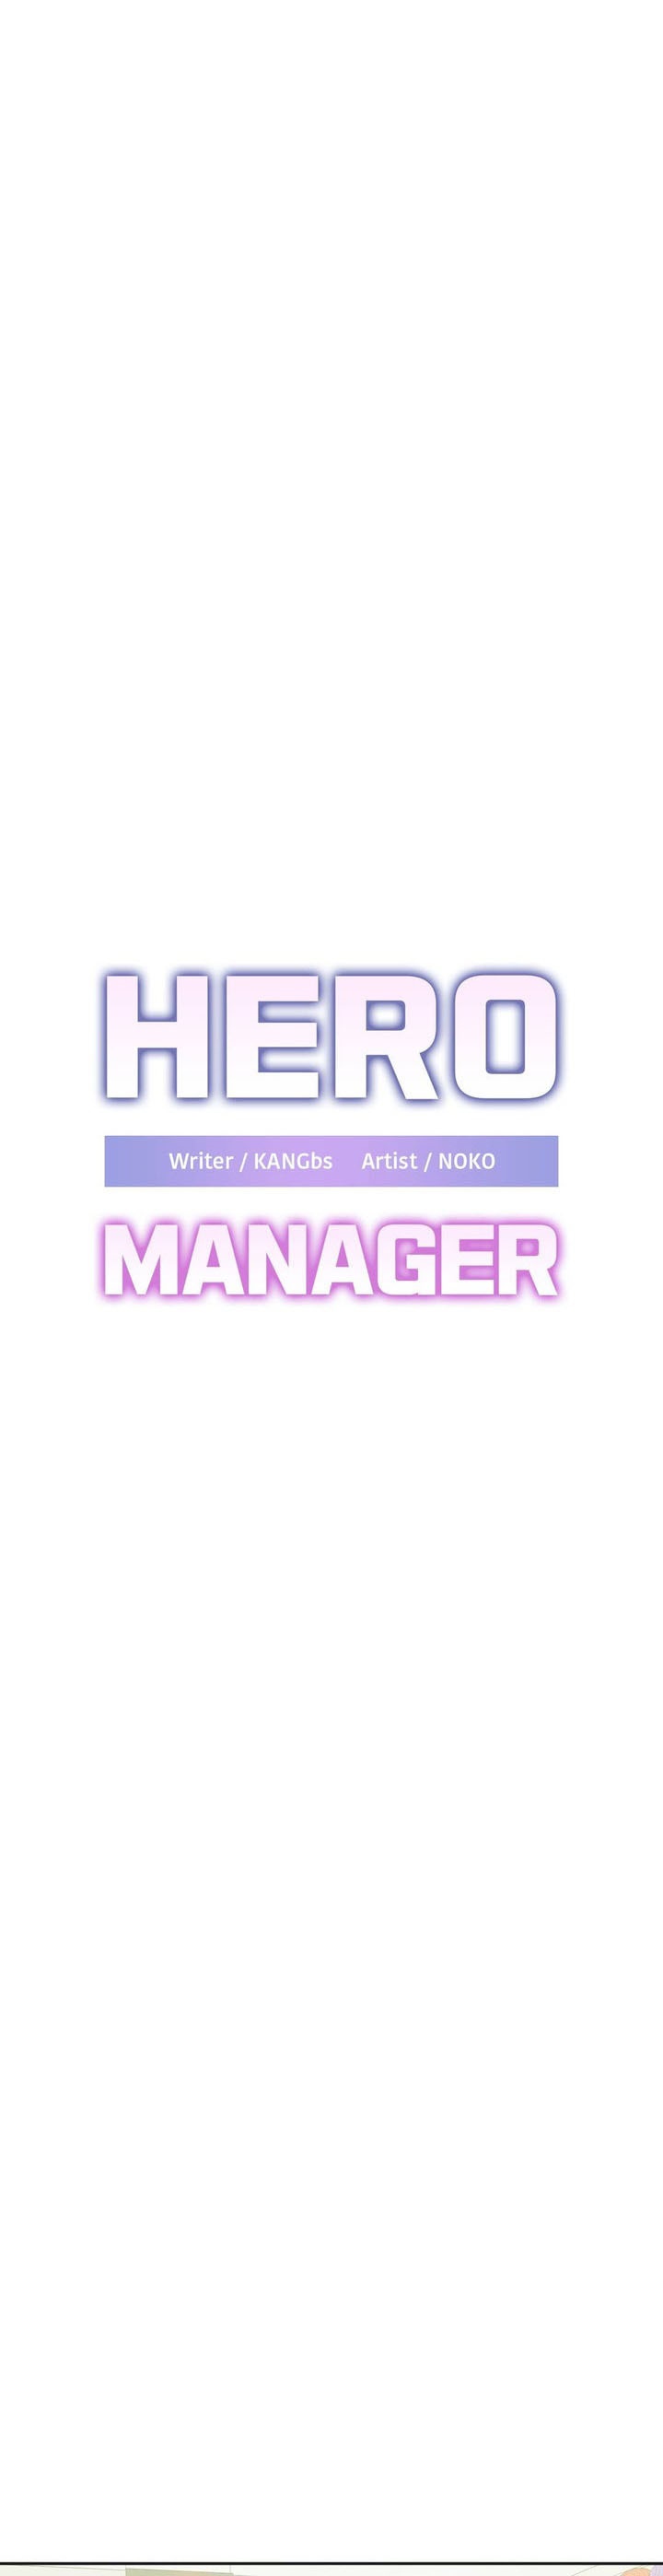 Hero Manager 25 (10)